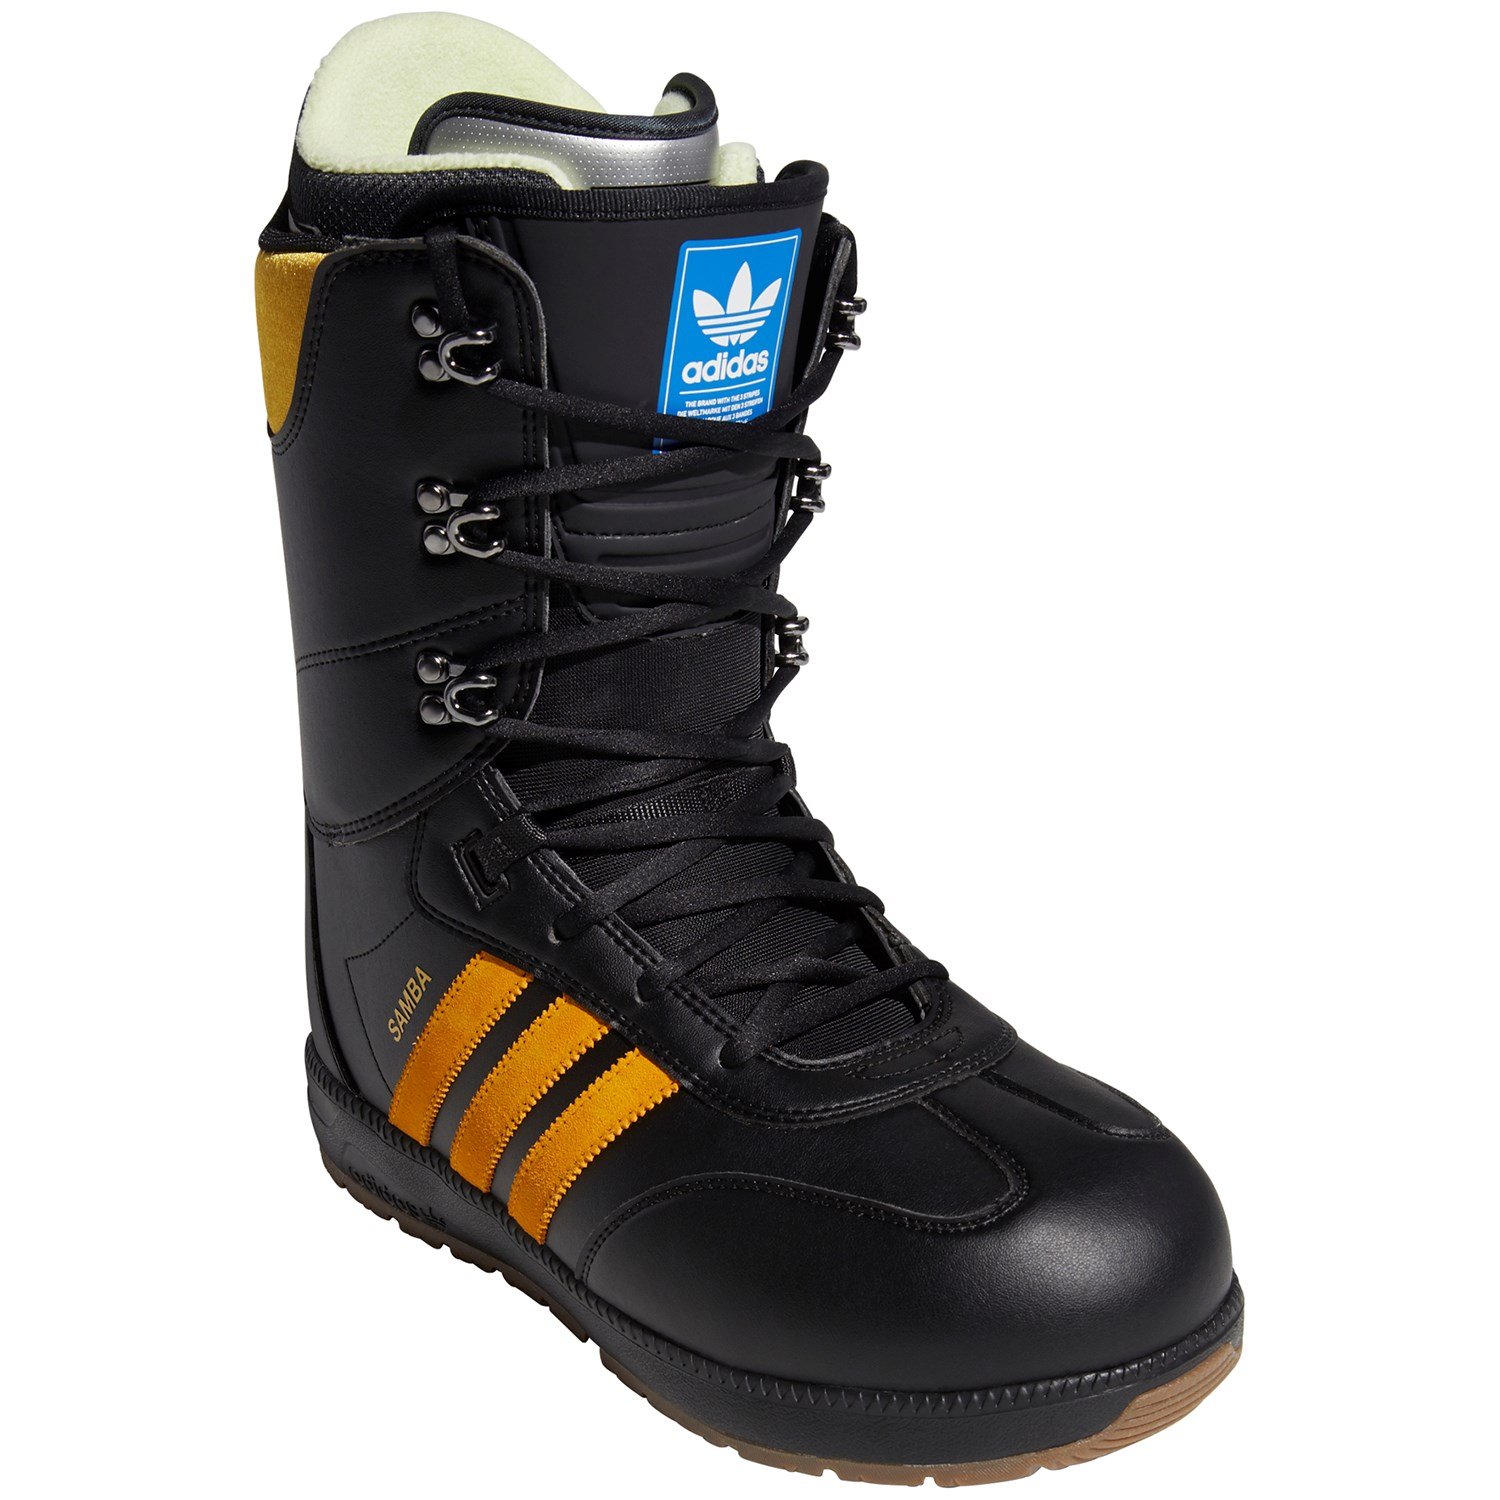 Adidas Samba Snowboard Boots Review Low Prices, Save 60% | jlcatj.gob.mx